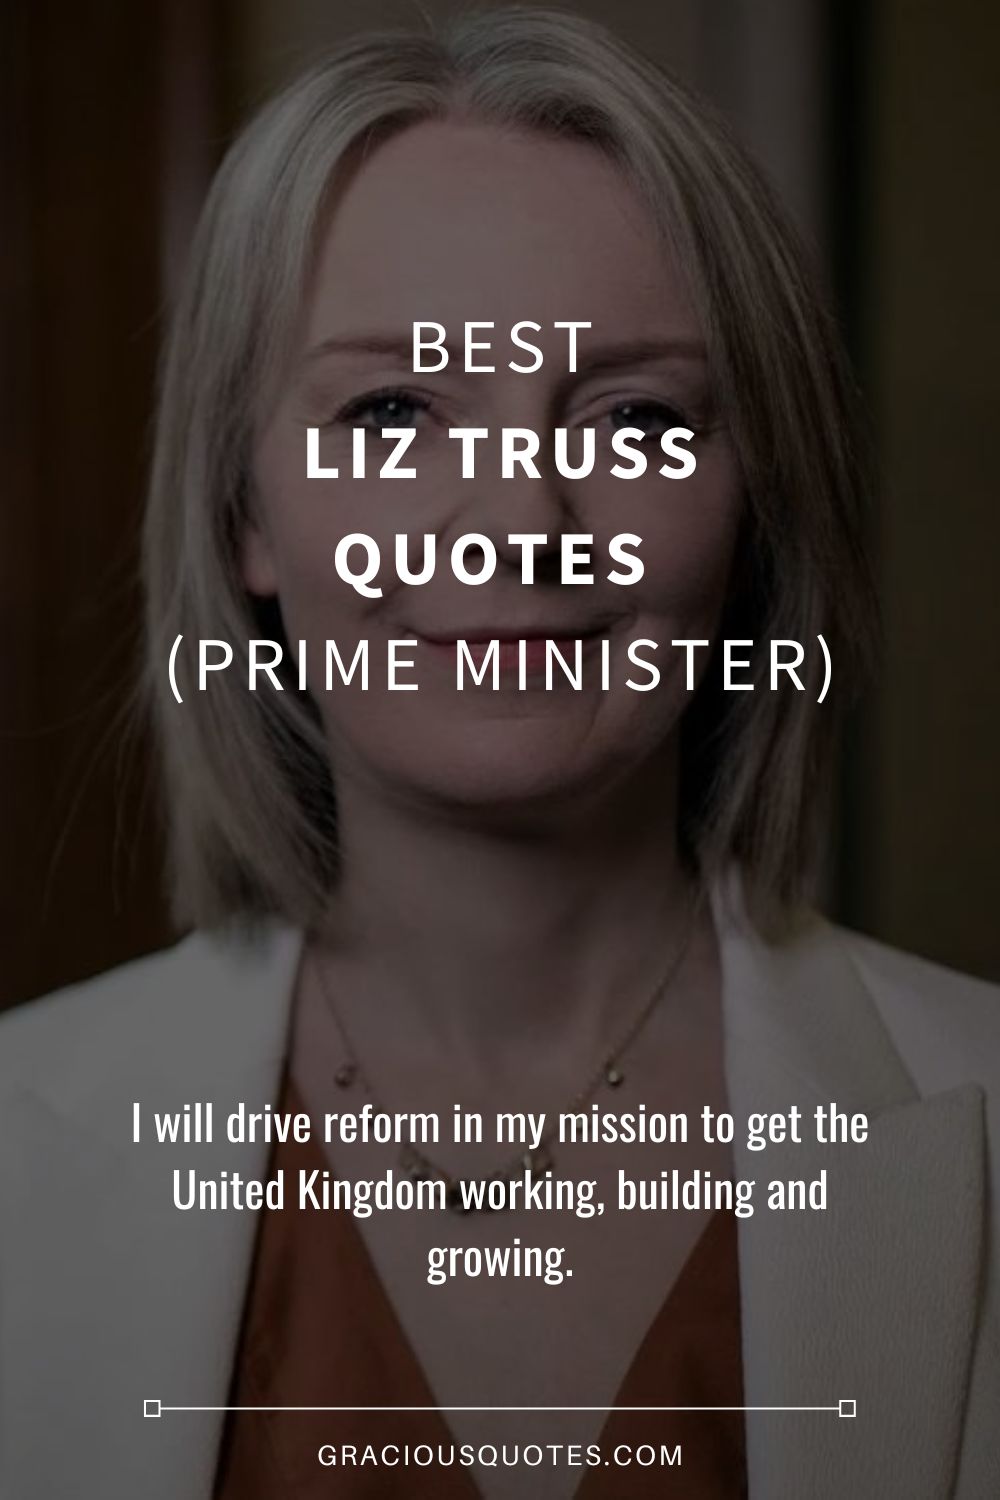 Best Liz Truss Quotes (PRIME MINISTER) - Gracious Quotes